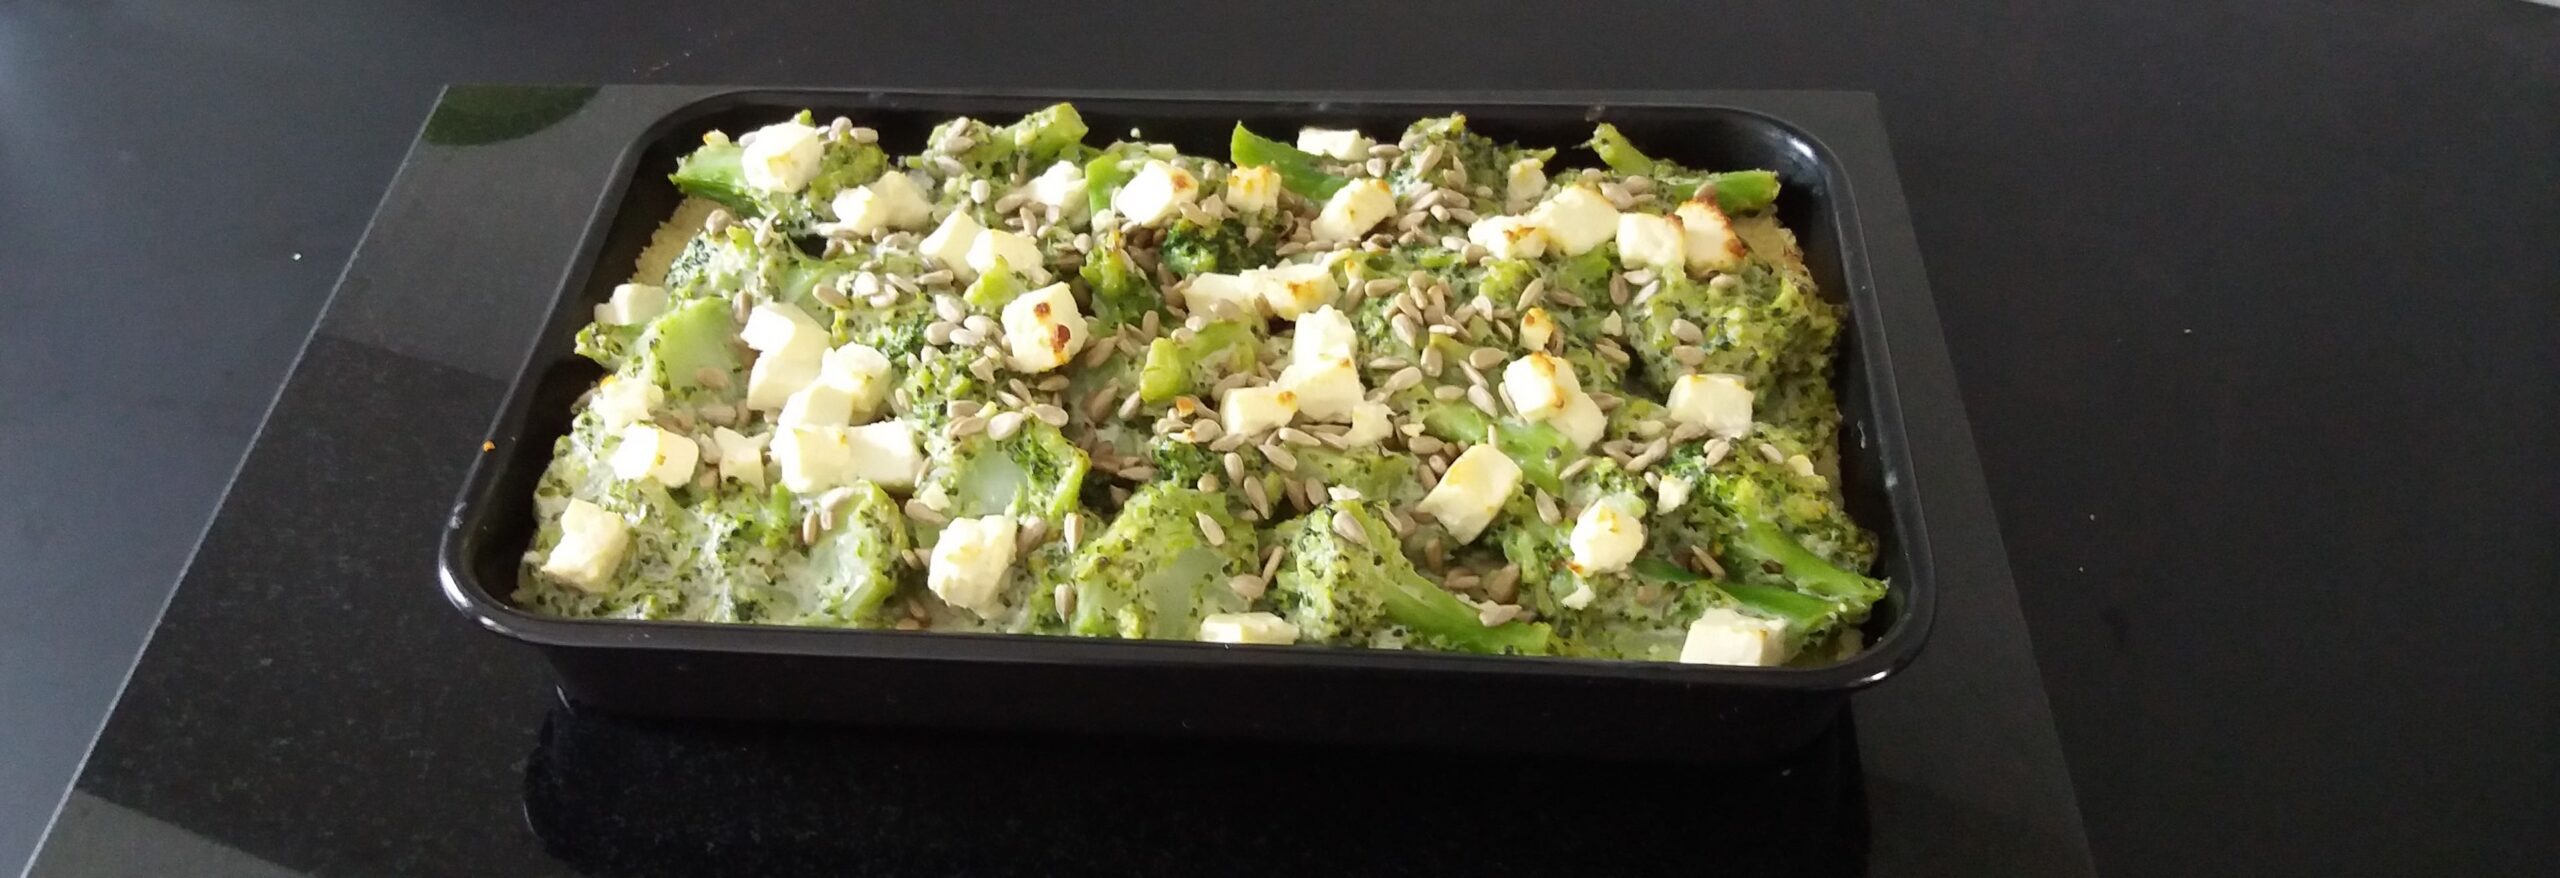 Delicious Couscous Broccoli Gratin With Feta Cheese - Brighton Journal